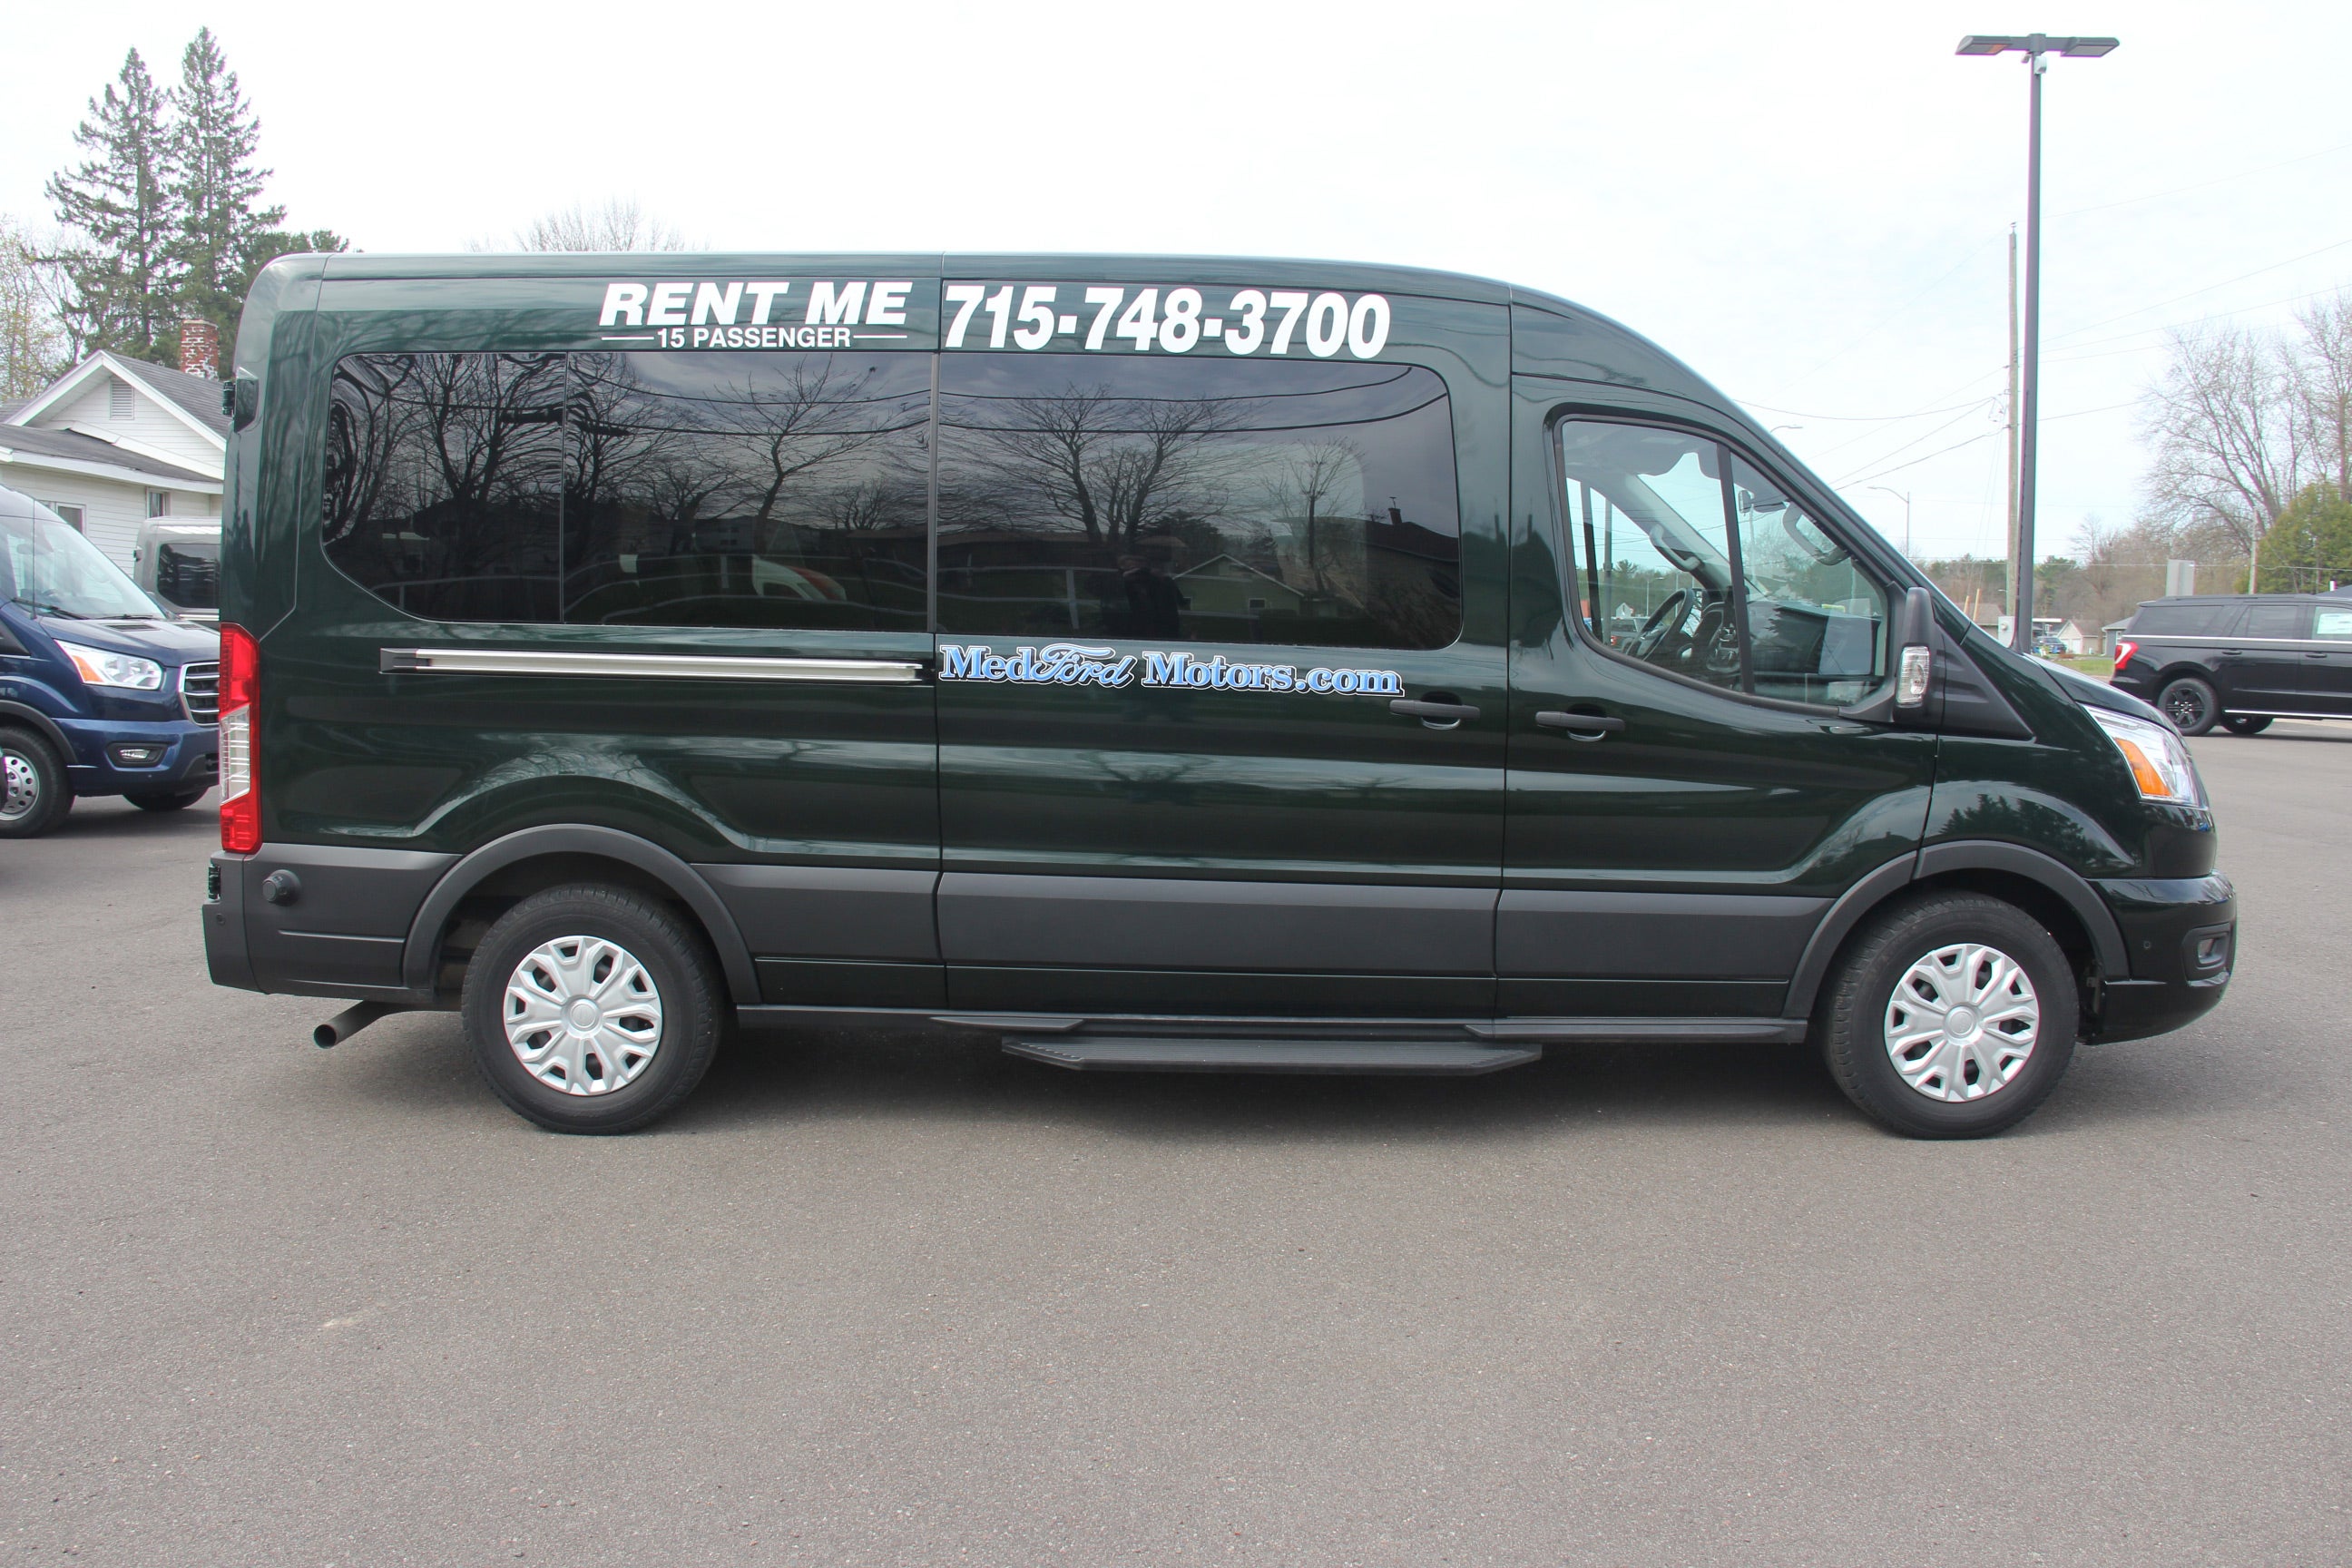 15 Passenger Transit Van | Medford Motors, Inc. in Medford WI